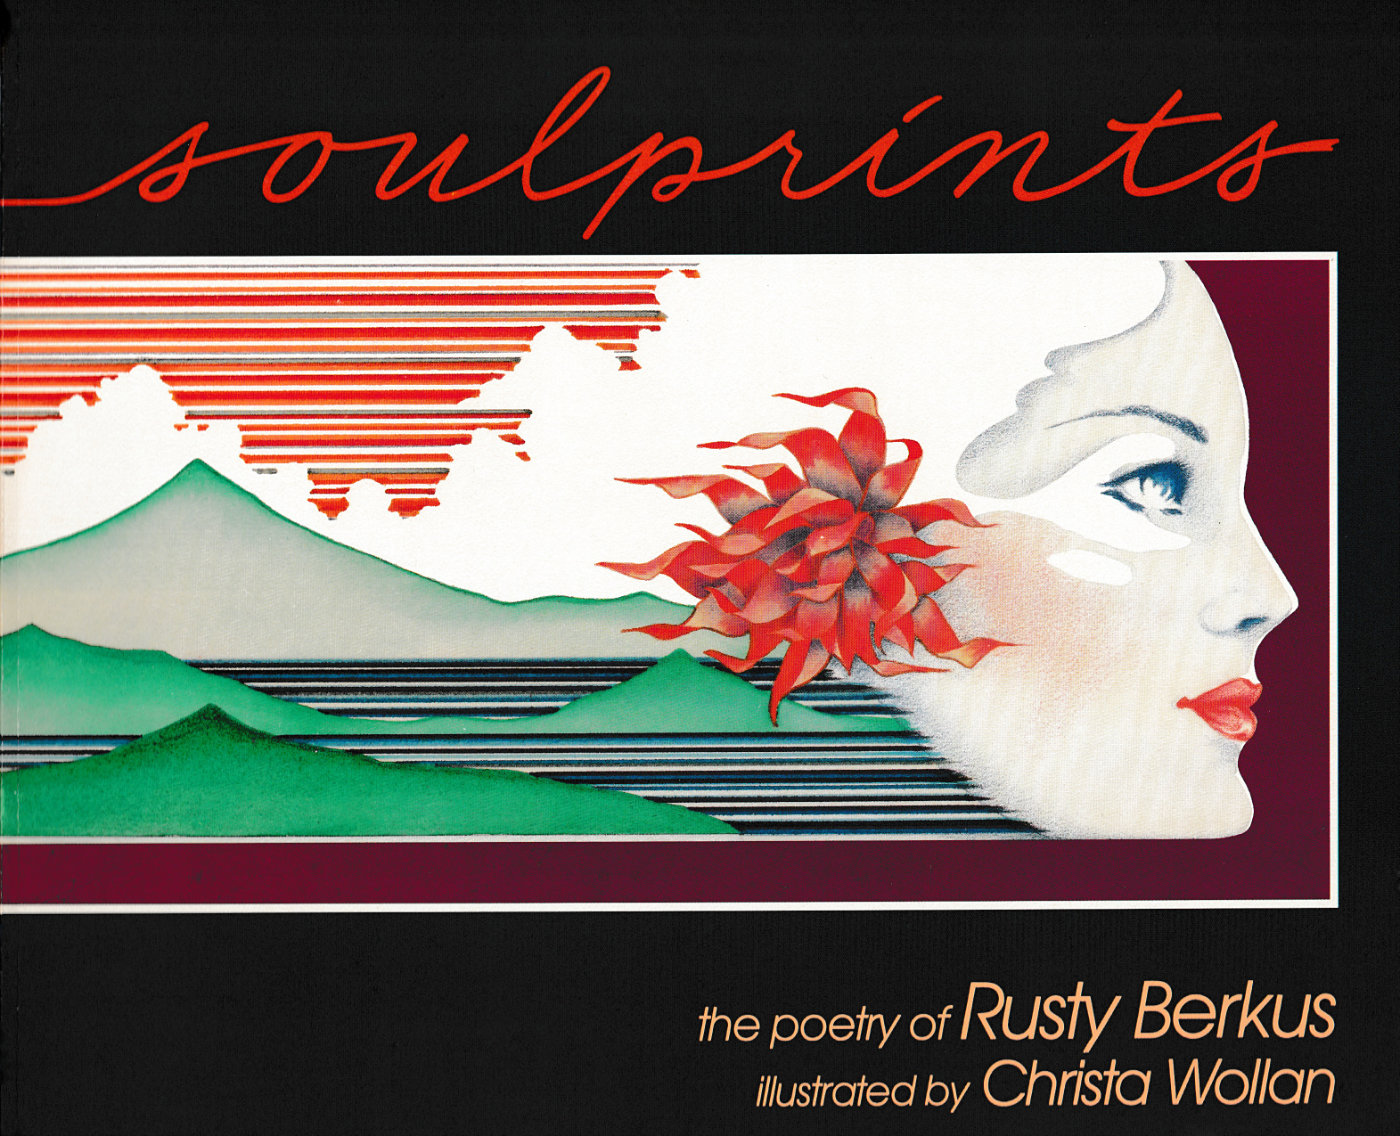 Soulprints: The Poetry of Rusty Berkus